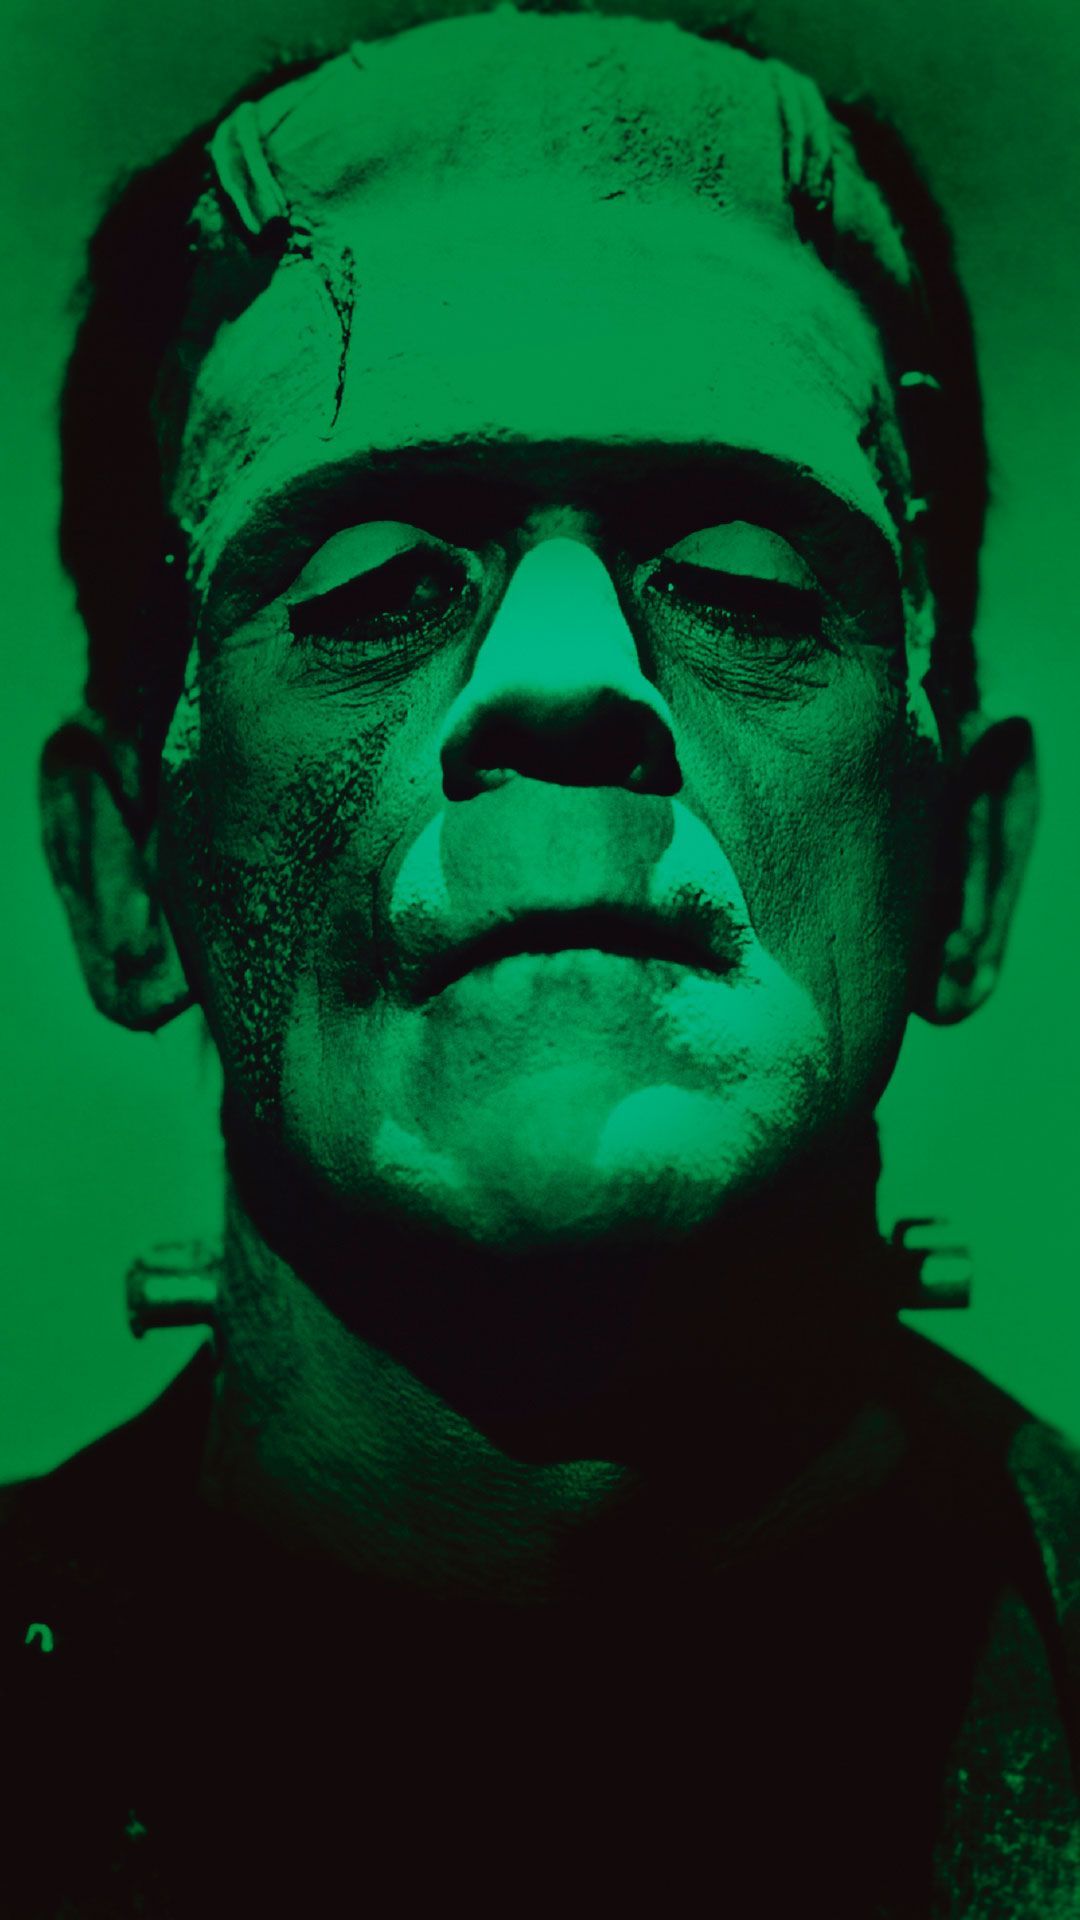 Frankenstein Wallpaper. Halloween wallpaper, Frankenstein, Green aesthetic